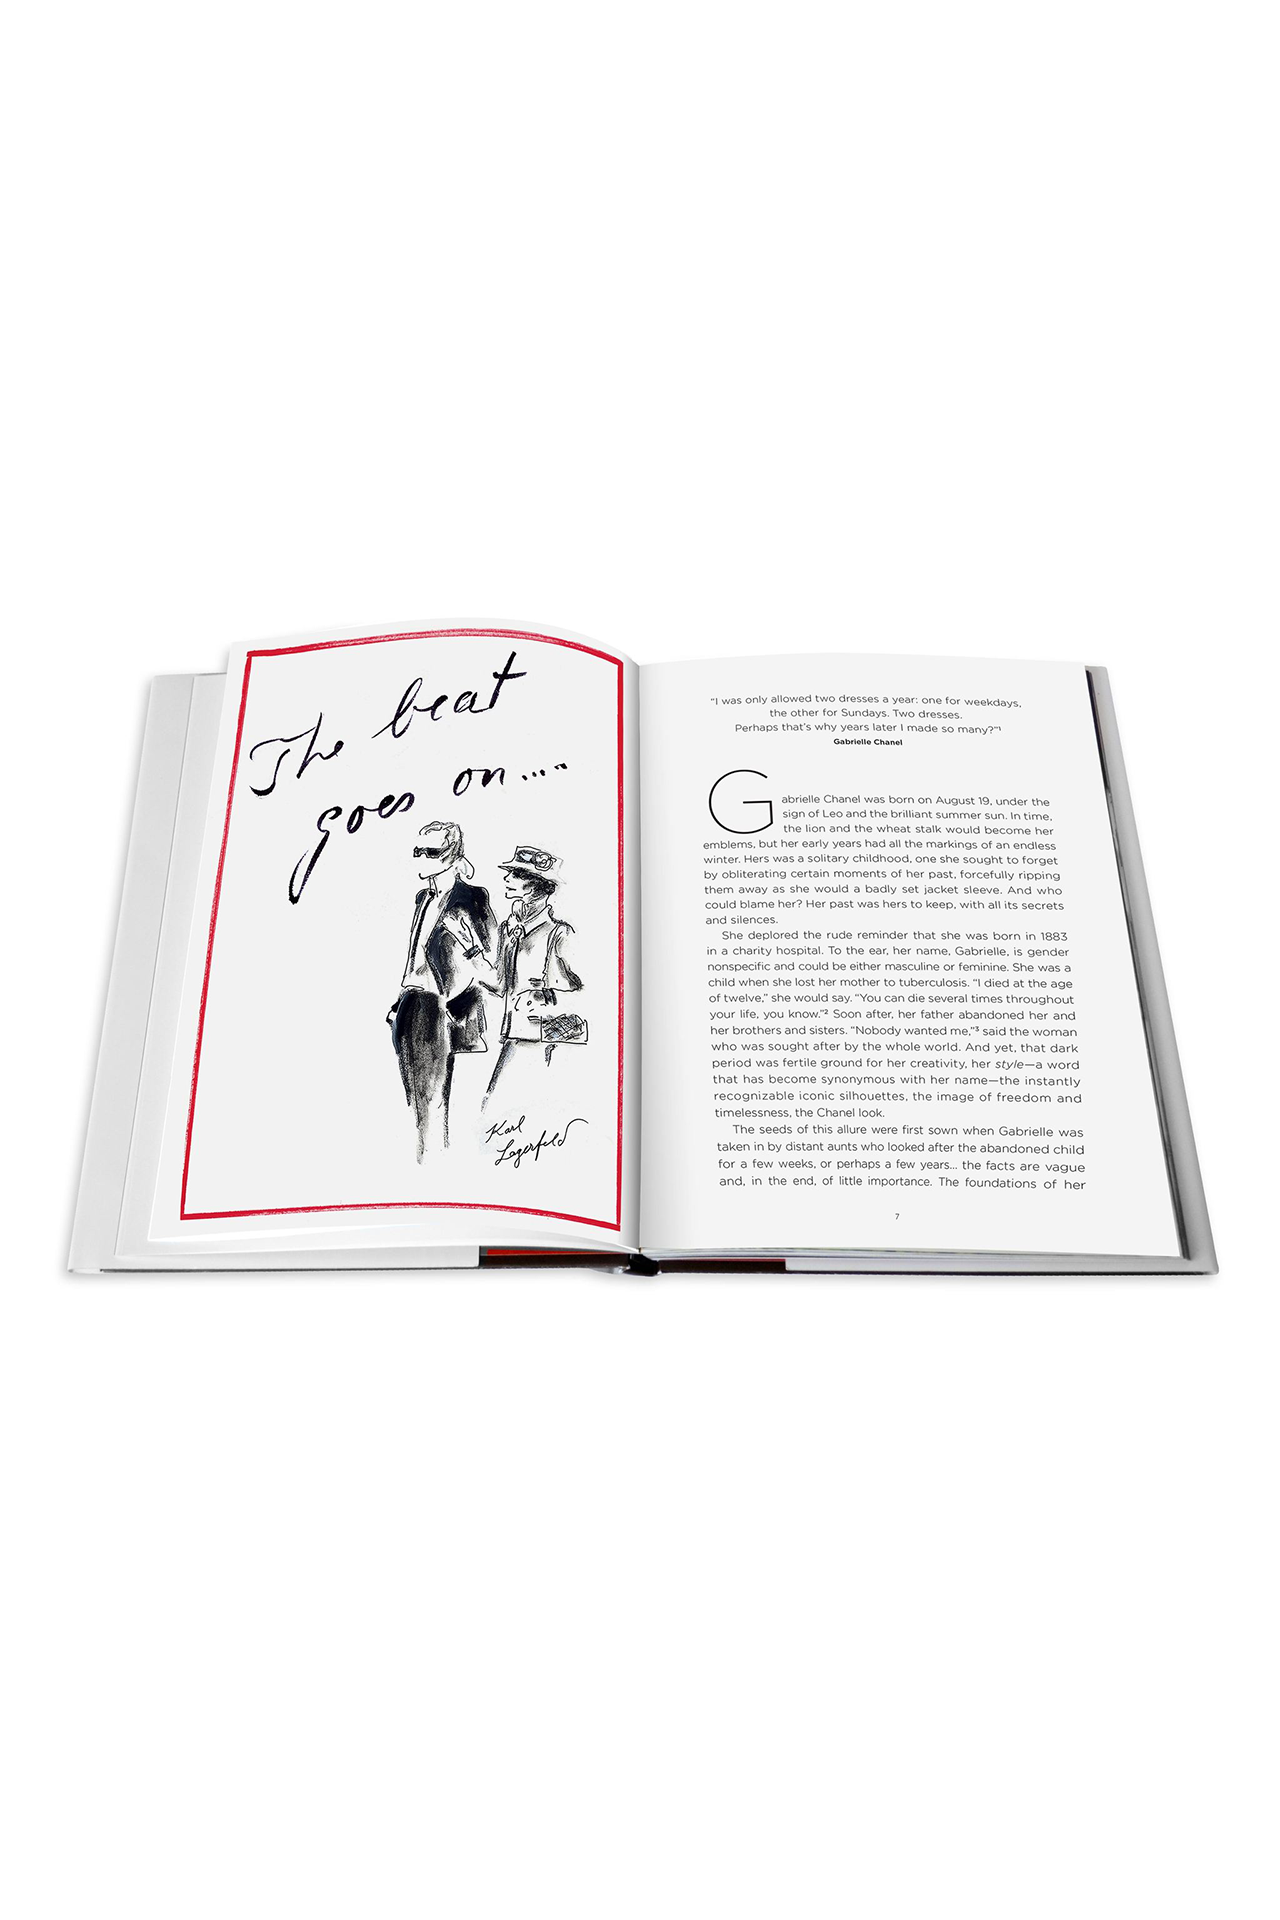 Chanel 3-Book Slipcase (4635766161523)